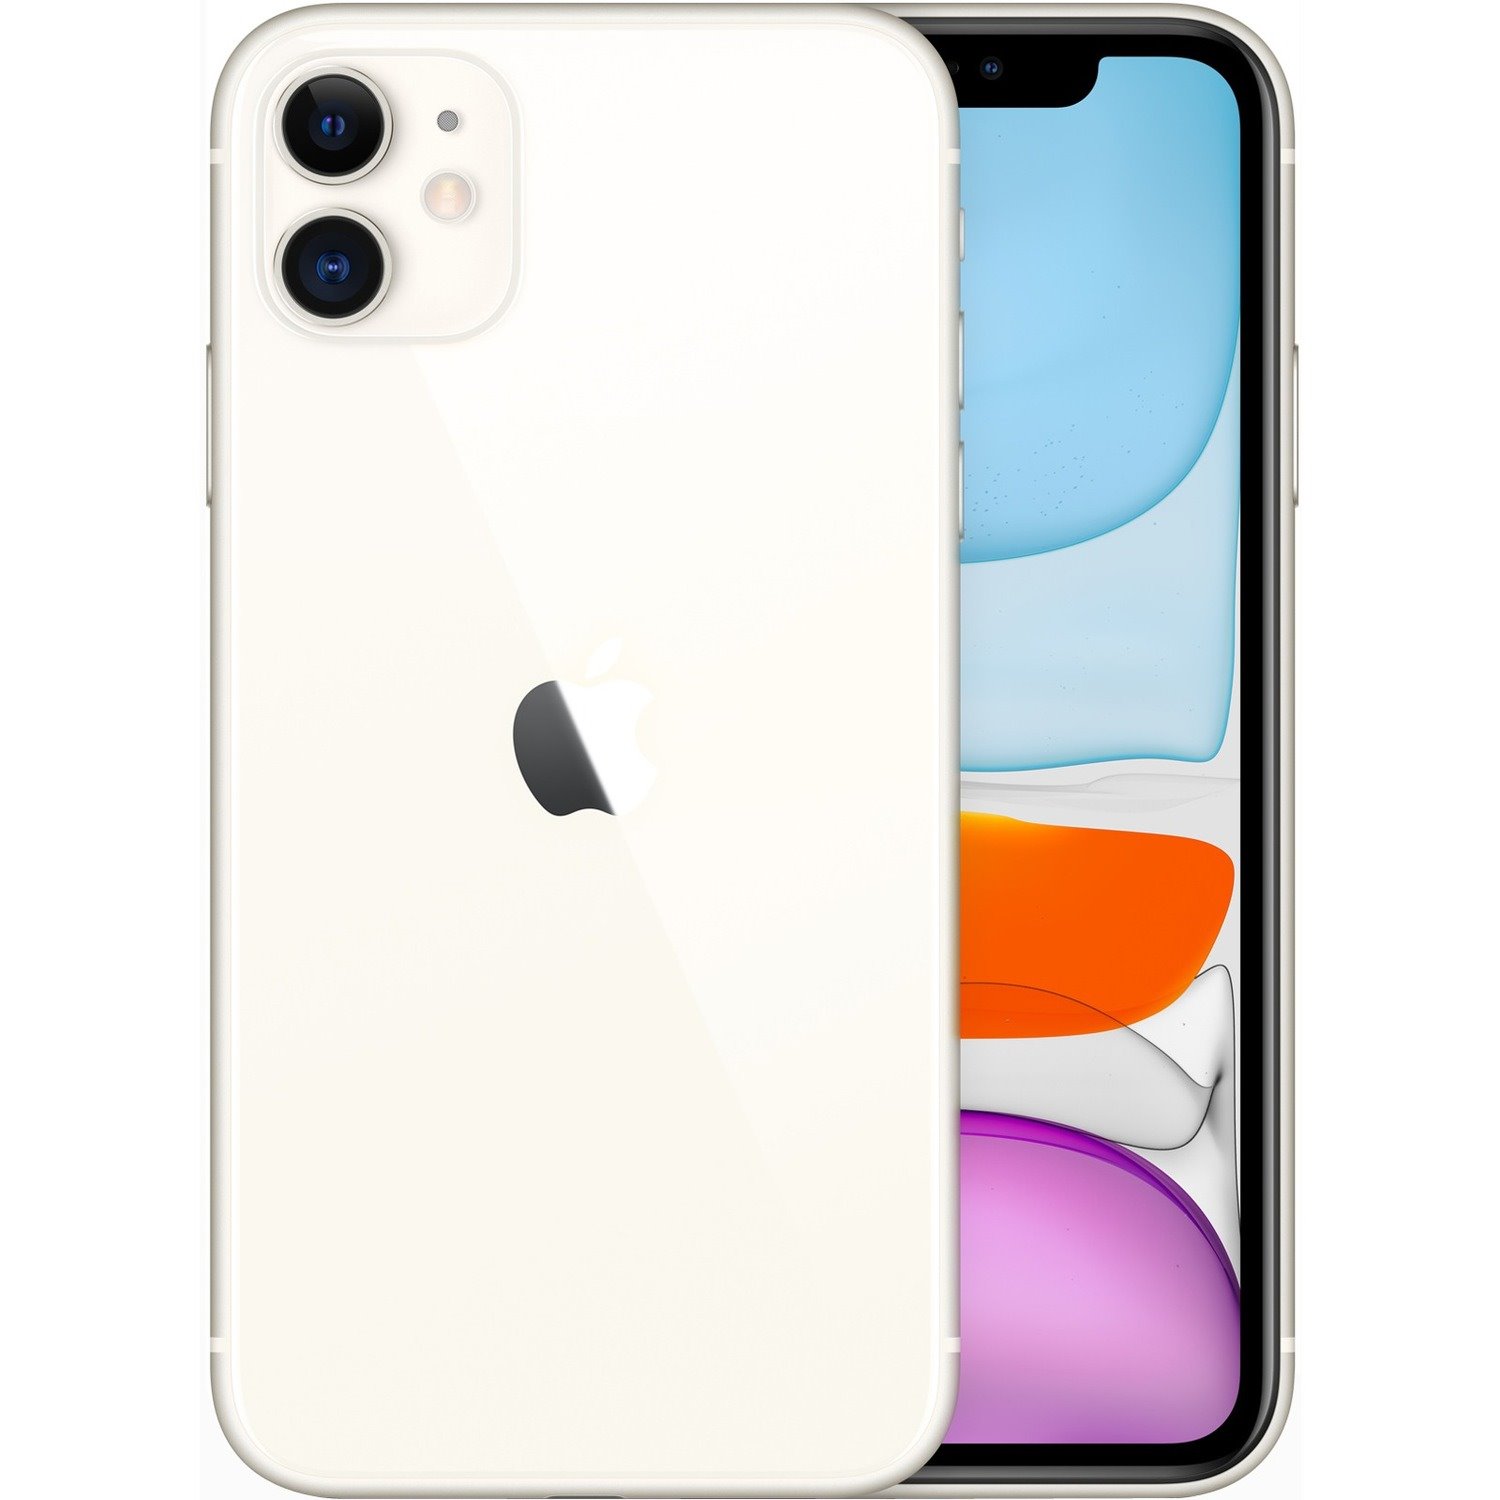 Apple iPhone 11 64 GB Smartphone - 6.1" LCD HD 1792 x 828 - 4 GB RAM - iOS 13 - 4G - White